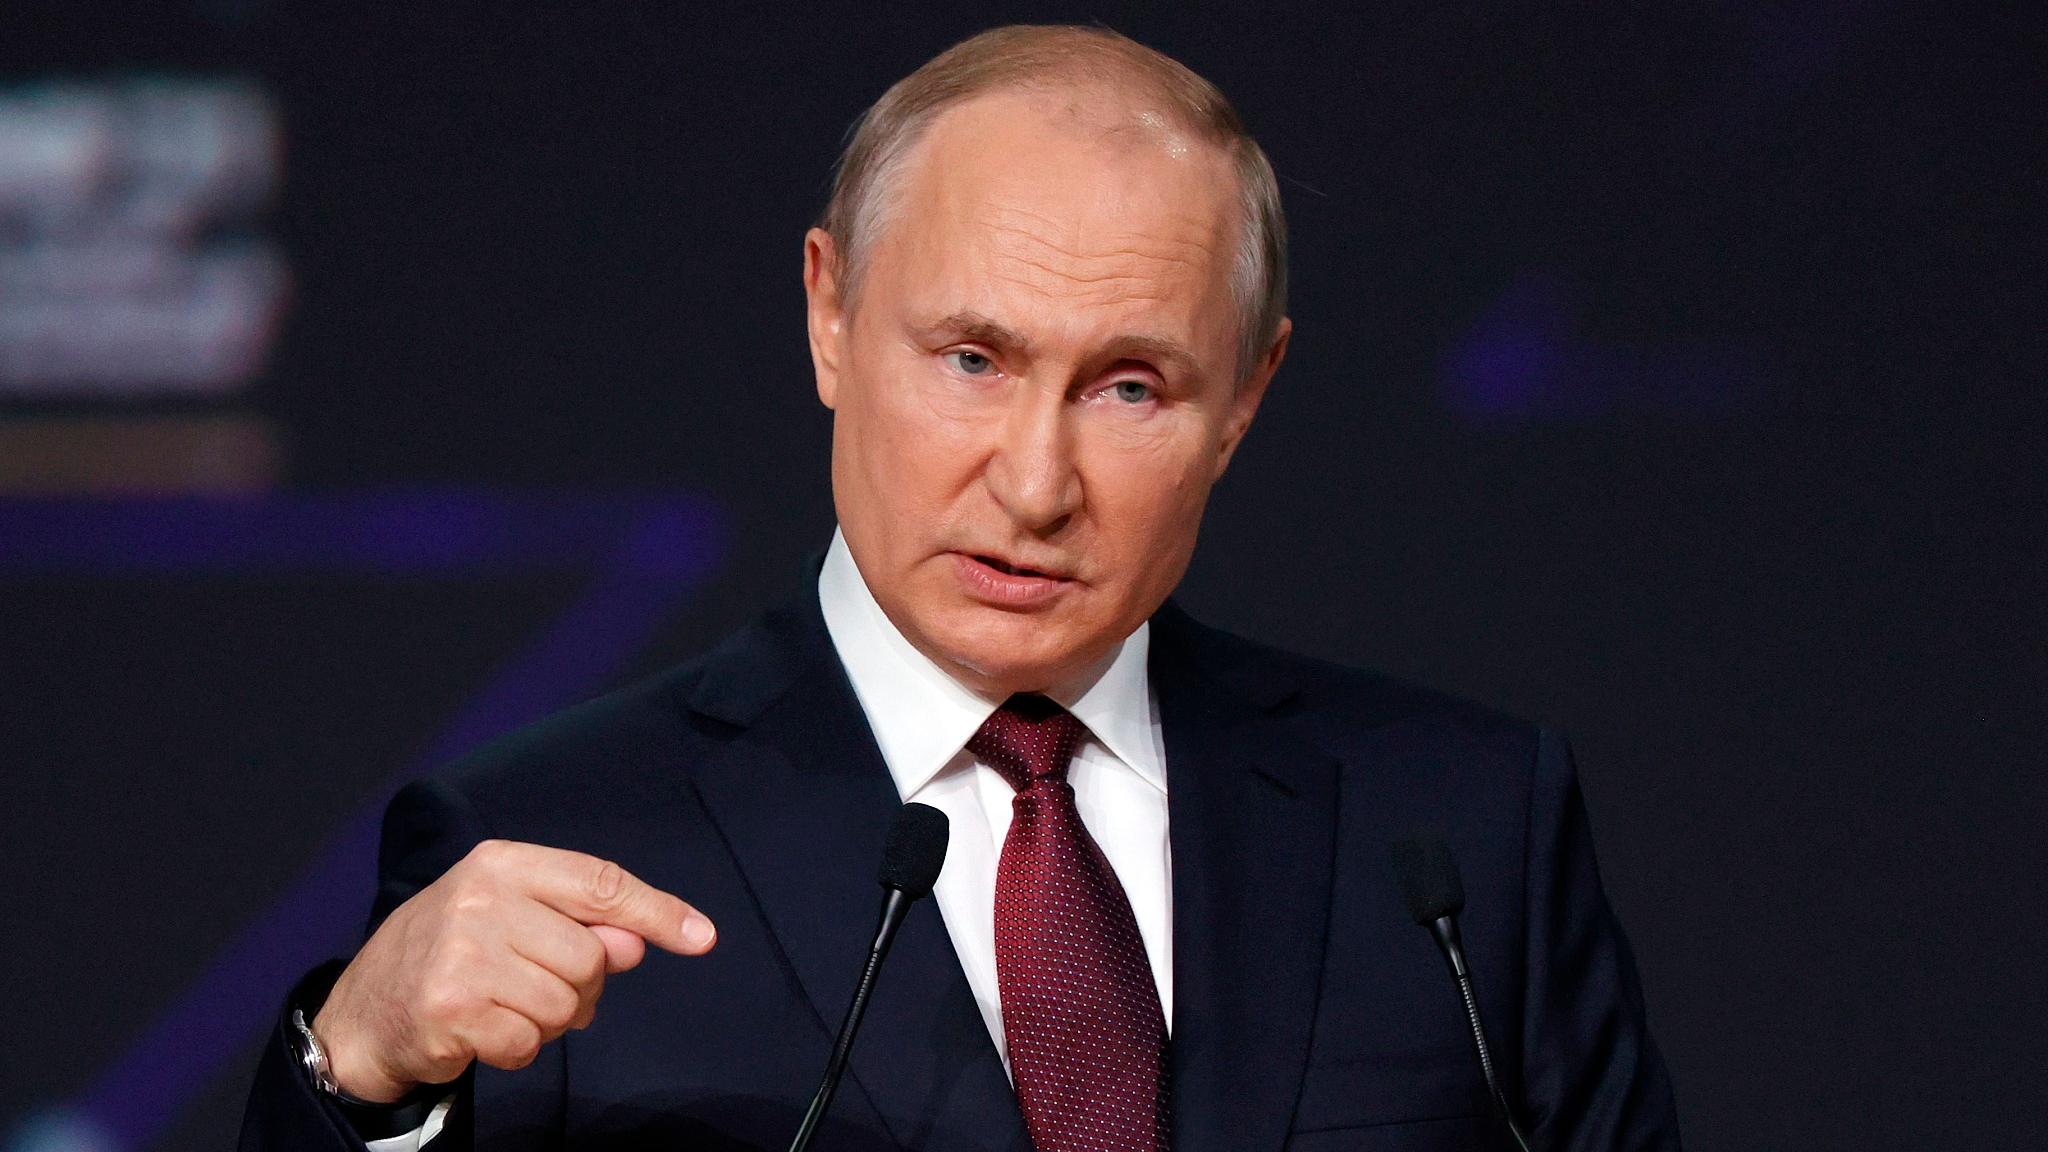 Putin Denies Cyberattacks On US Ahead Of Summit